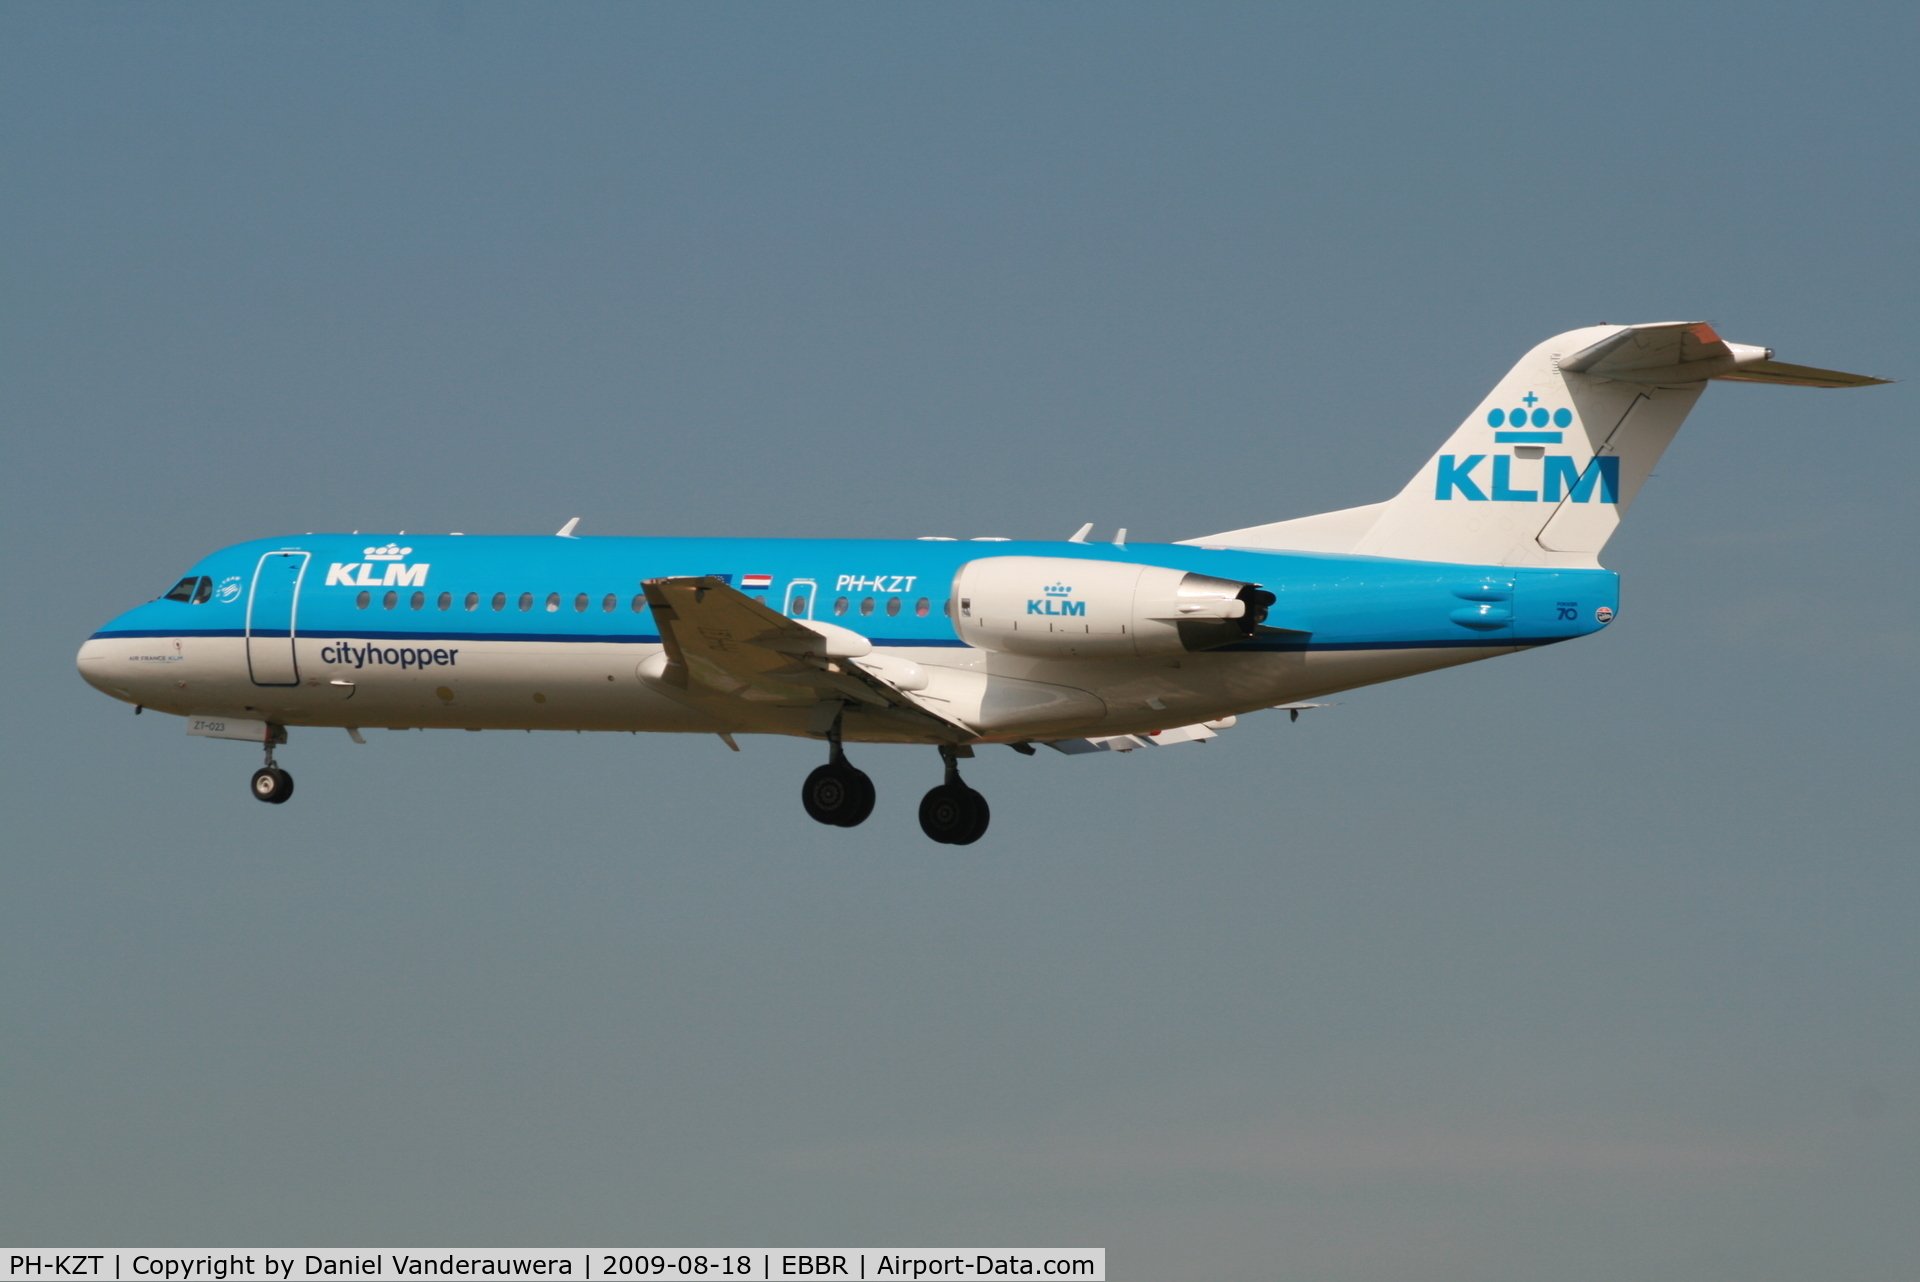 PH-KZT, 1995 Fokker 70 (F-28-0070) C/N 11541, flight KL1725 is descending to rwy 25L